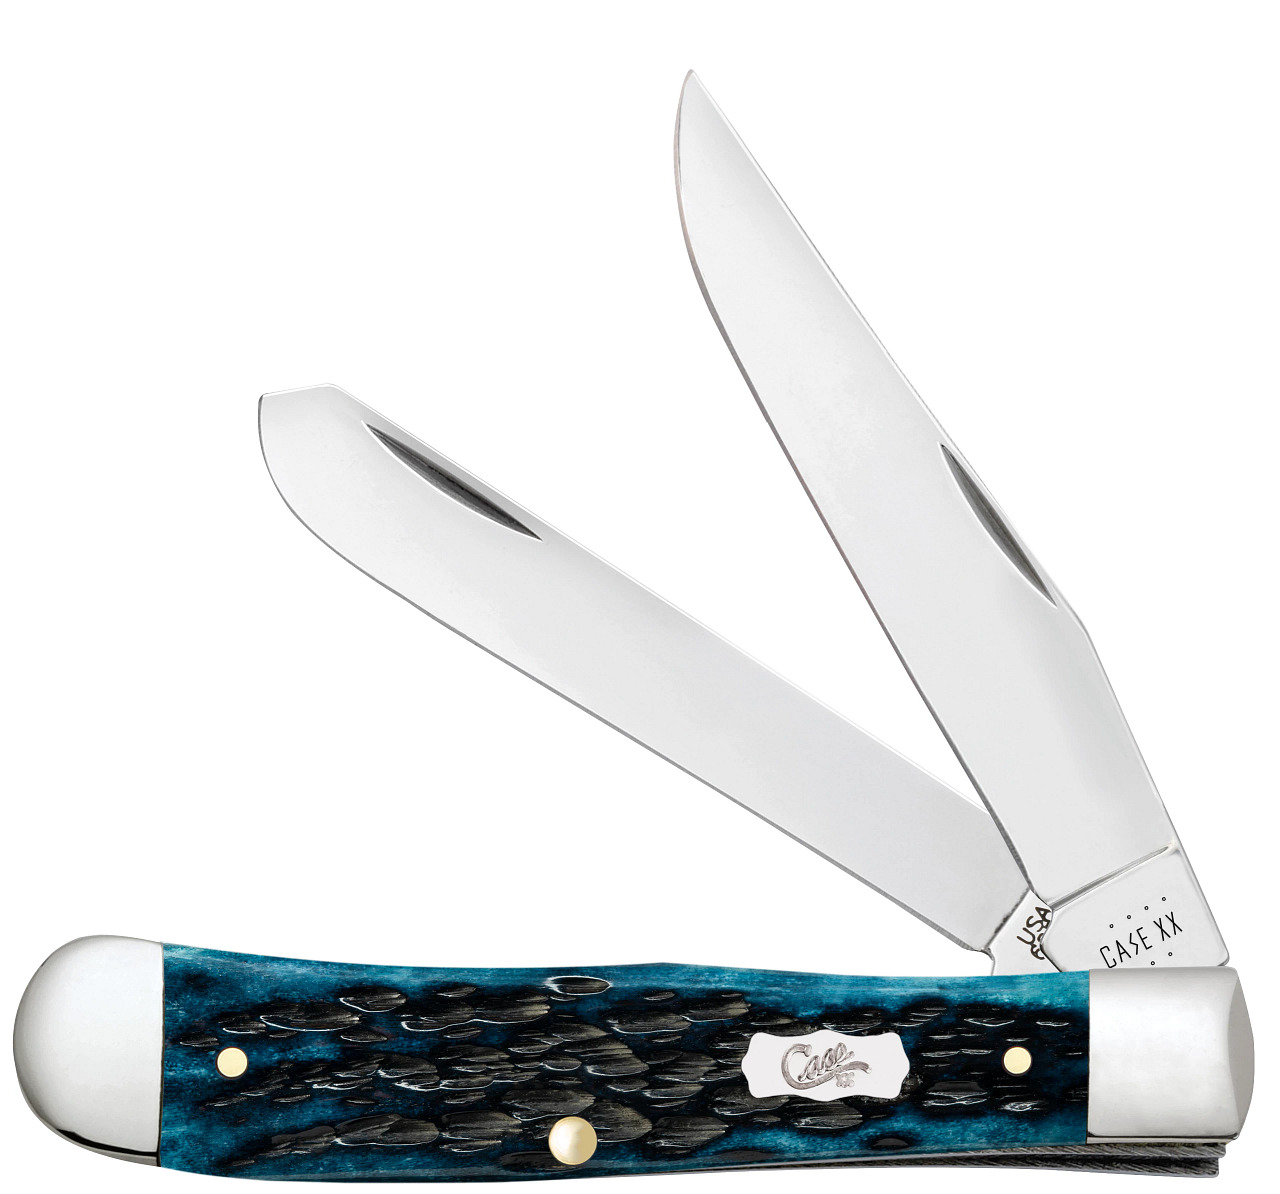 Case xx Trapper 51850 Peach Seed Mediterranean Blue Bone Pocket Knife Stainless